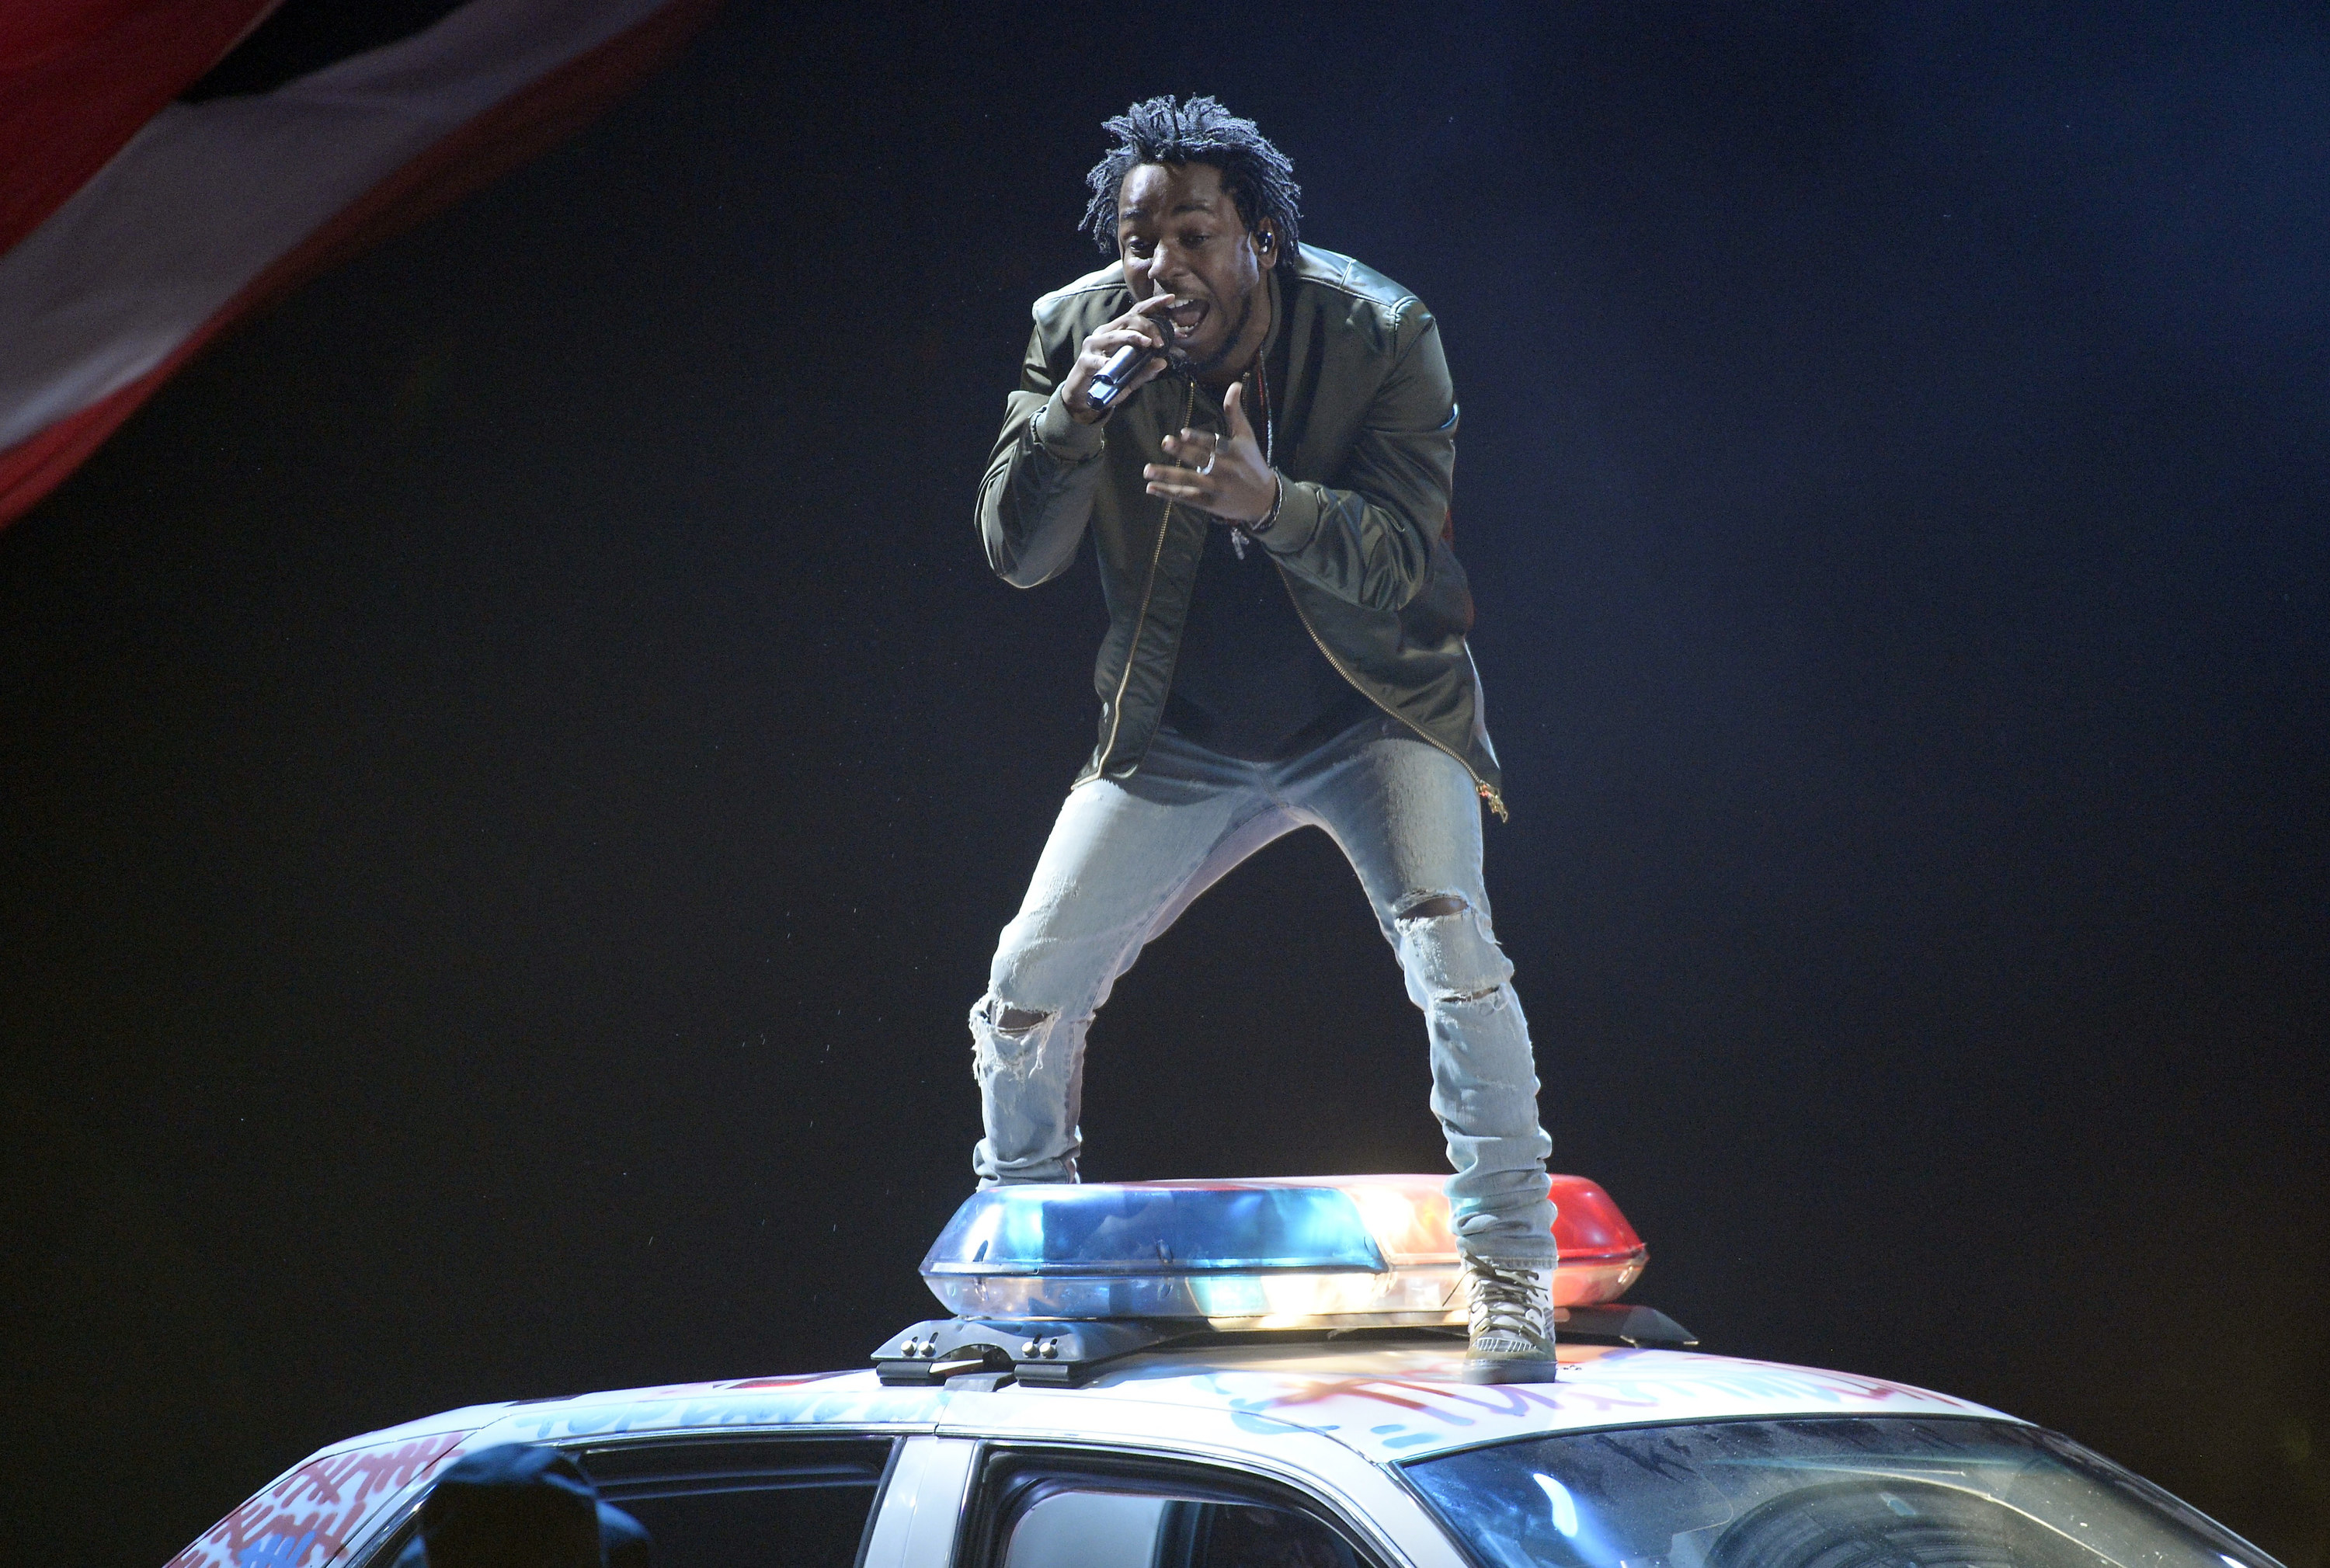 Kendrick performing Halo